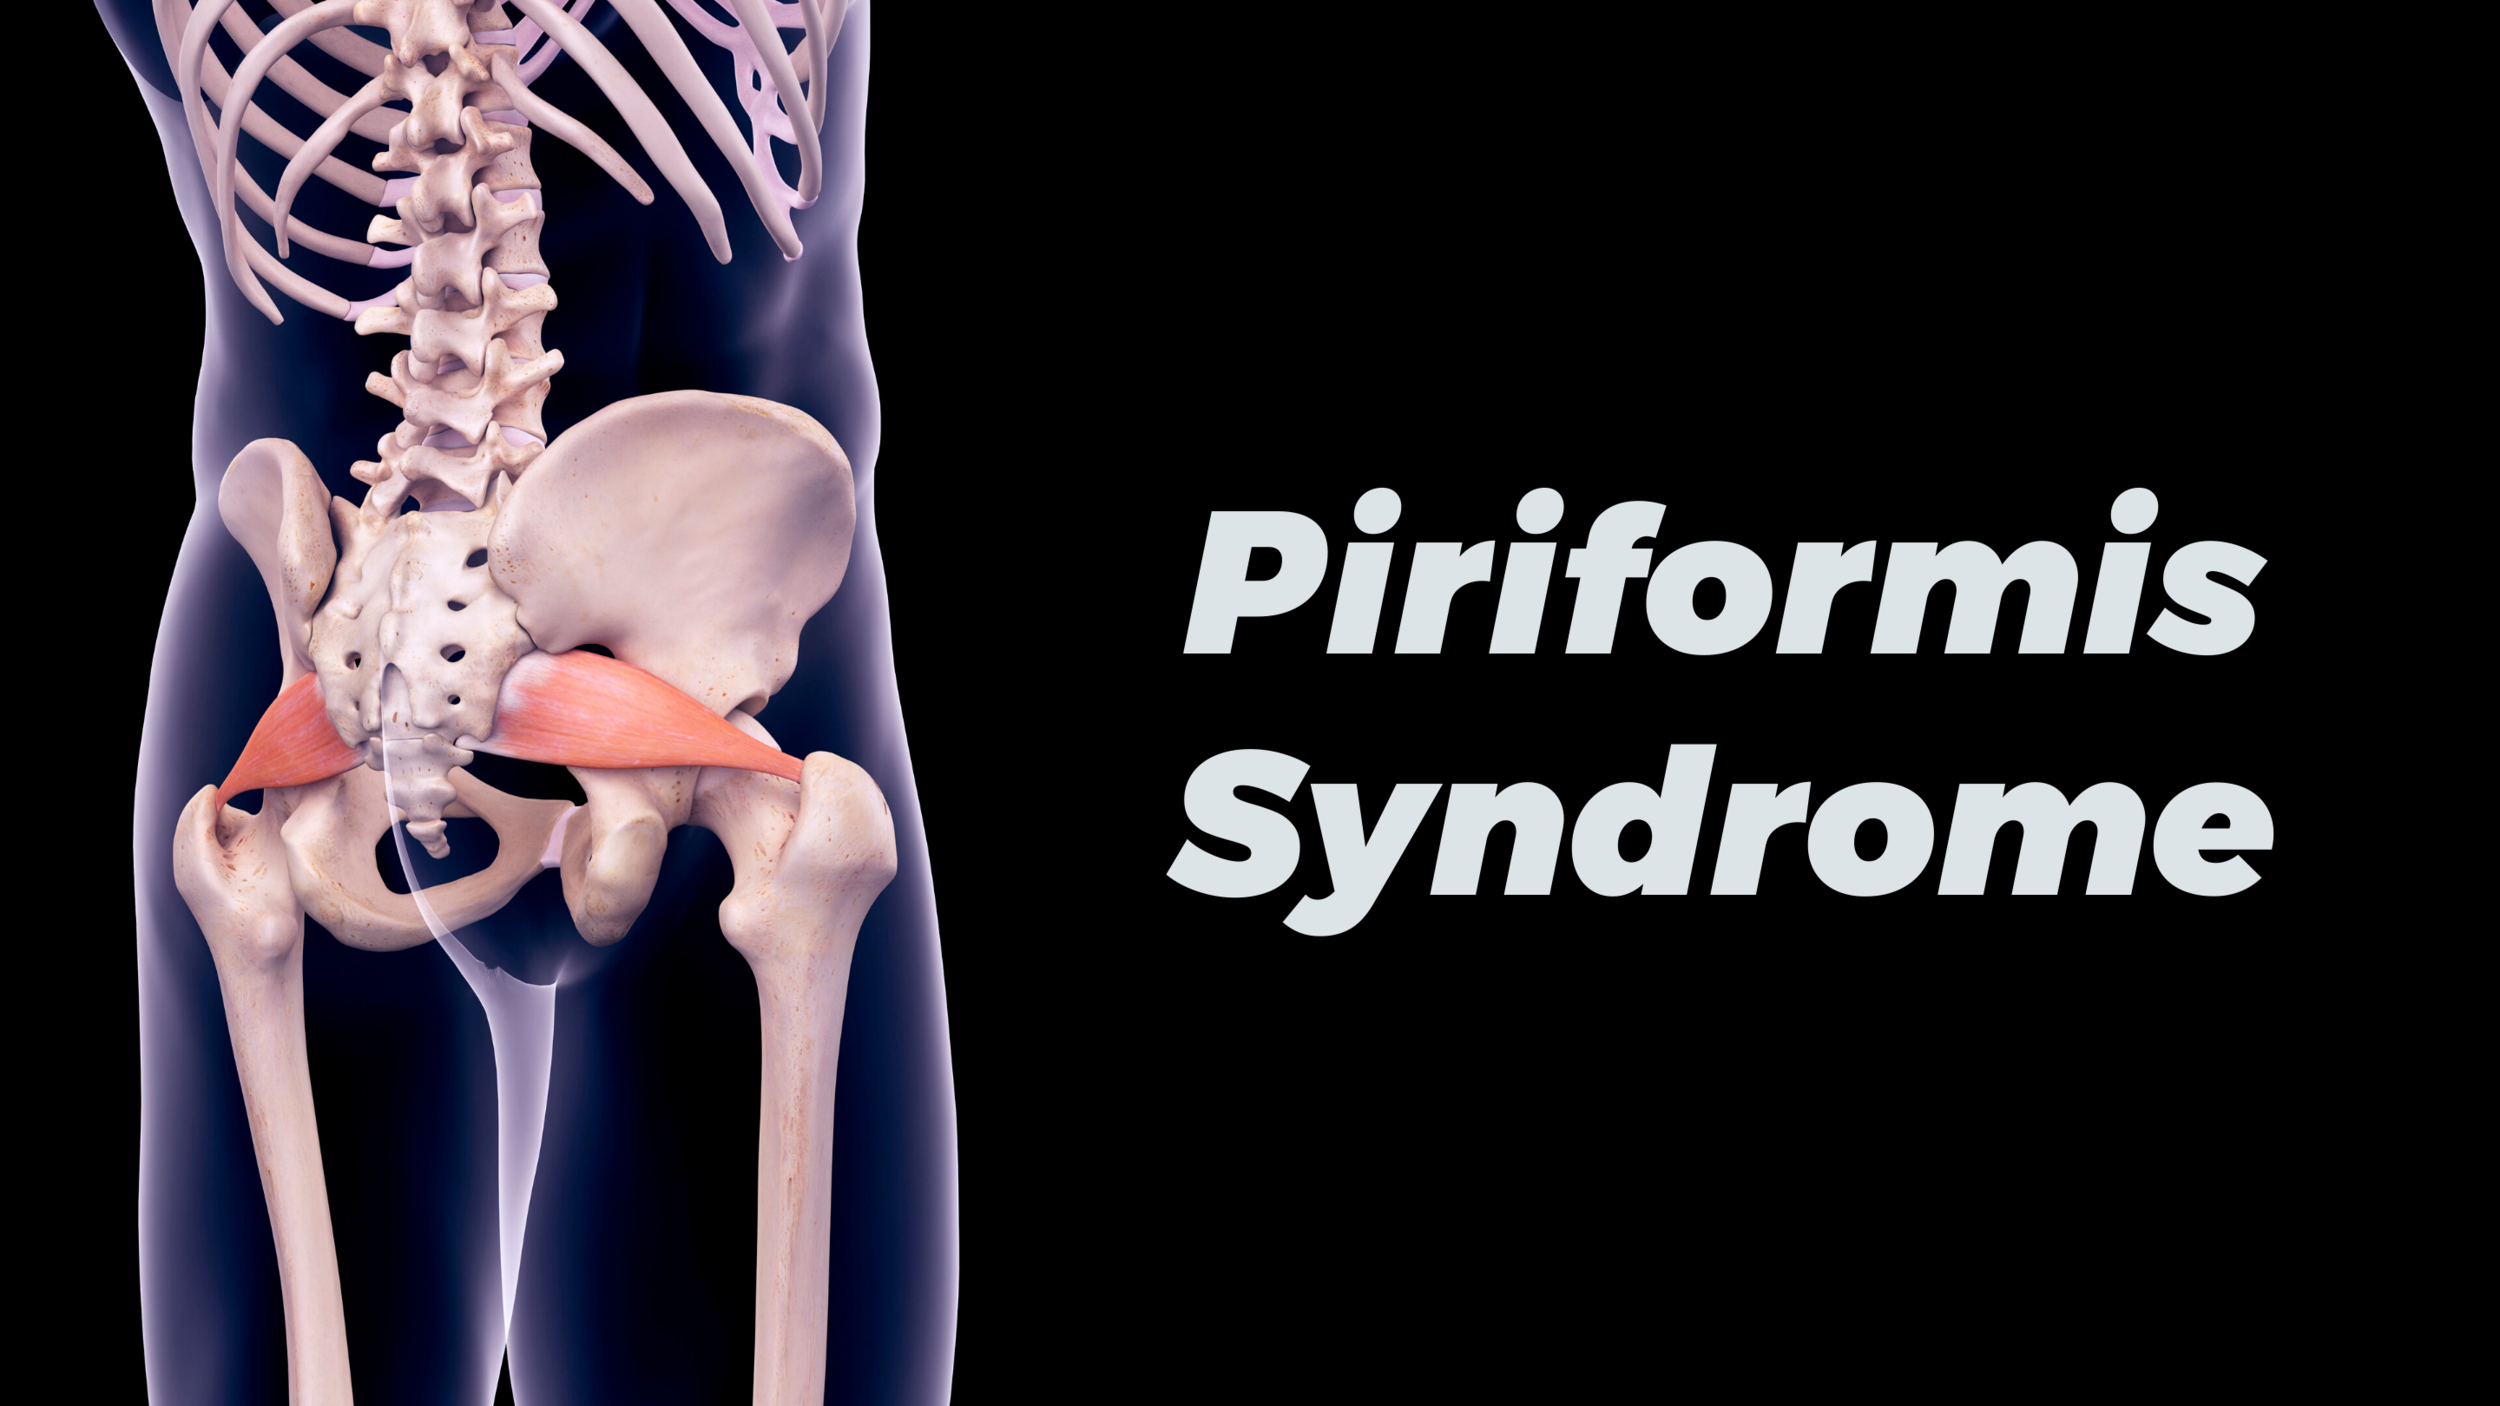 Piriformis Syndrome: Symptoms, Causes and Treatment